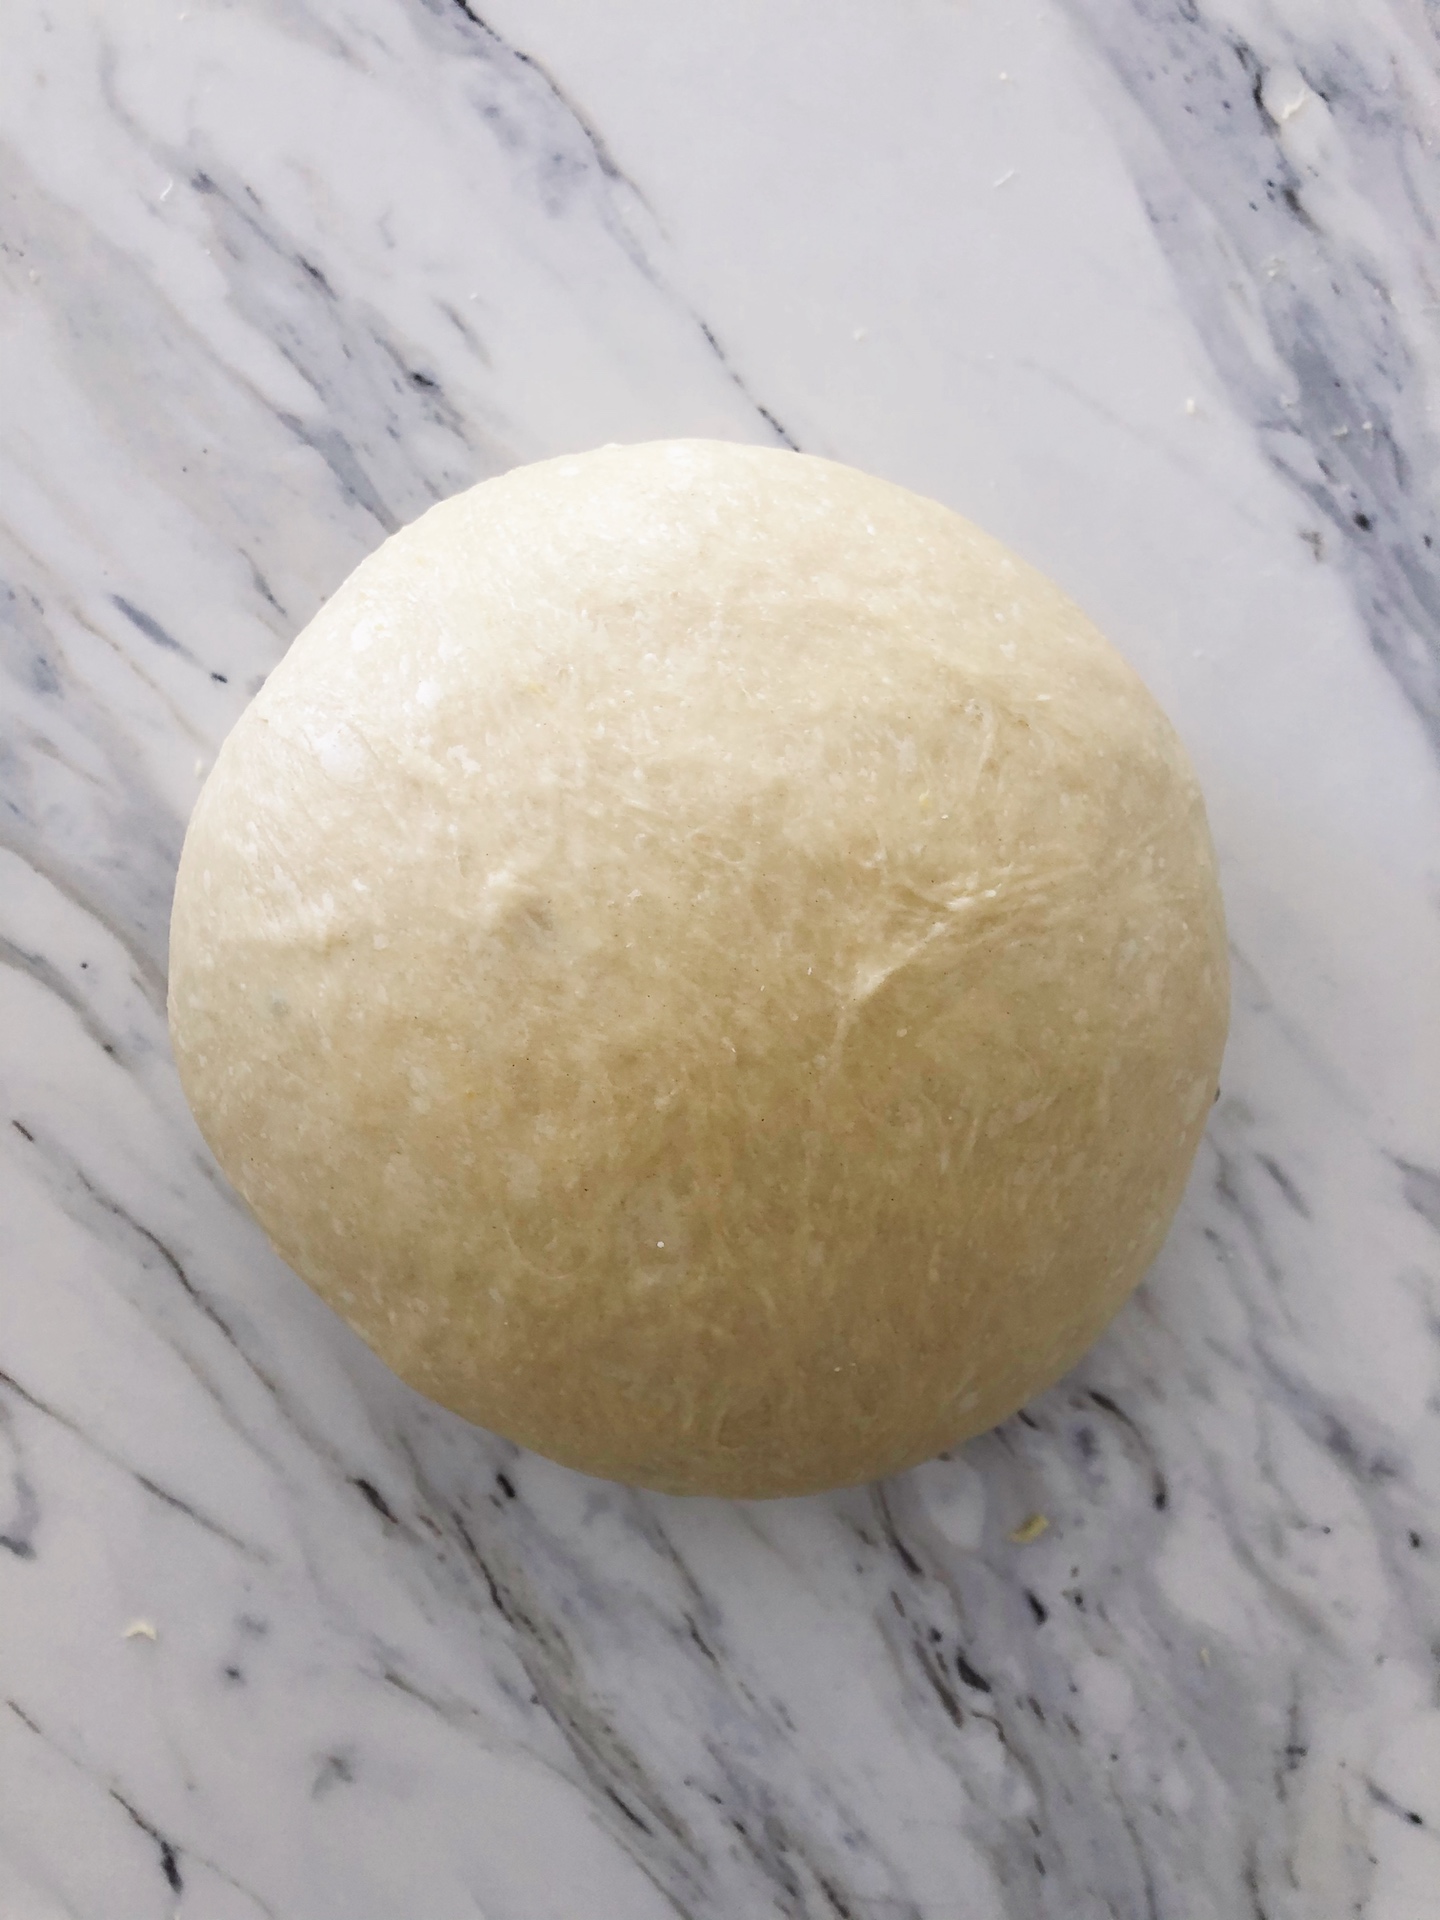 Smooth dough for spelt streuselkuchen after kneading